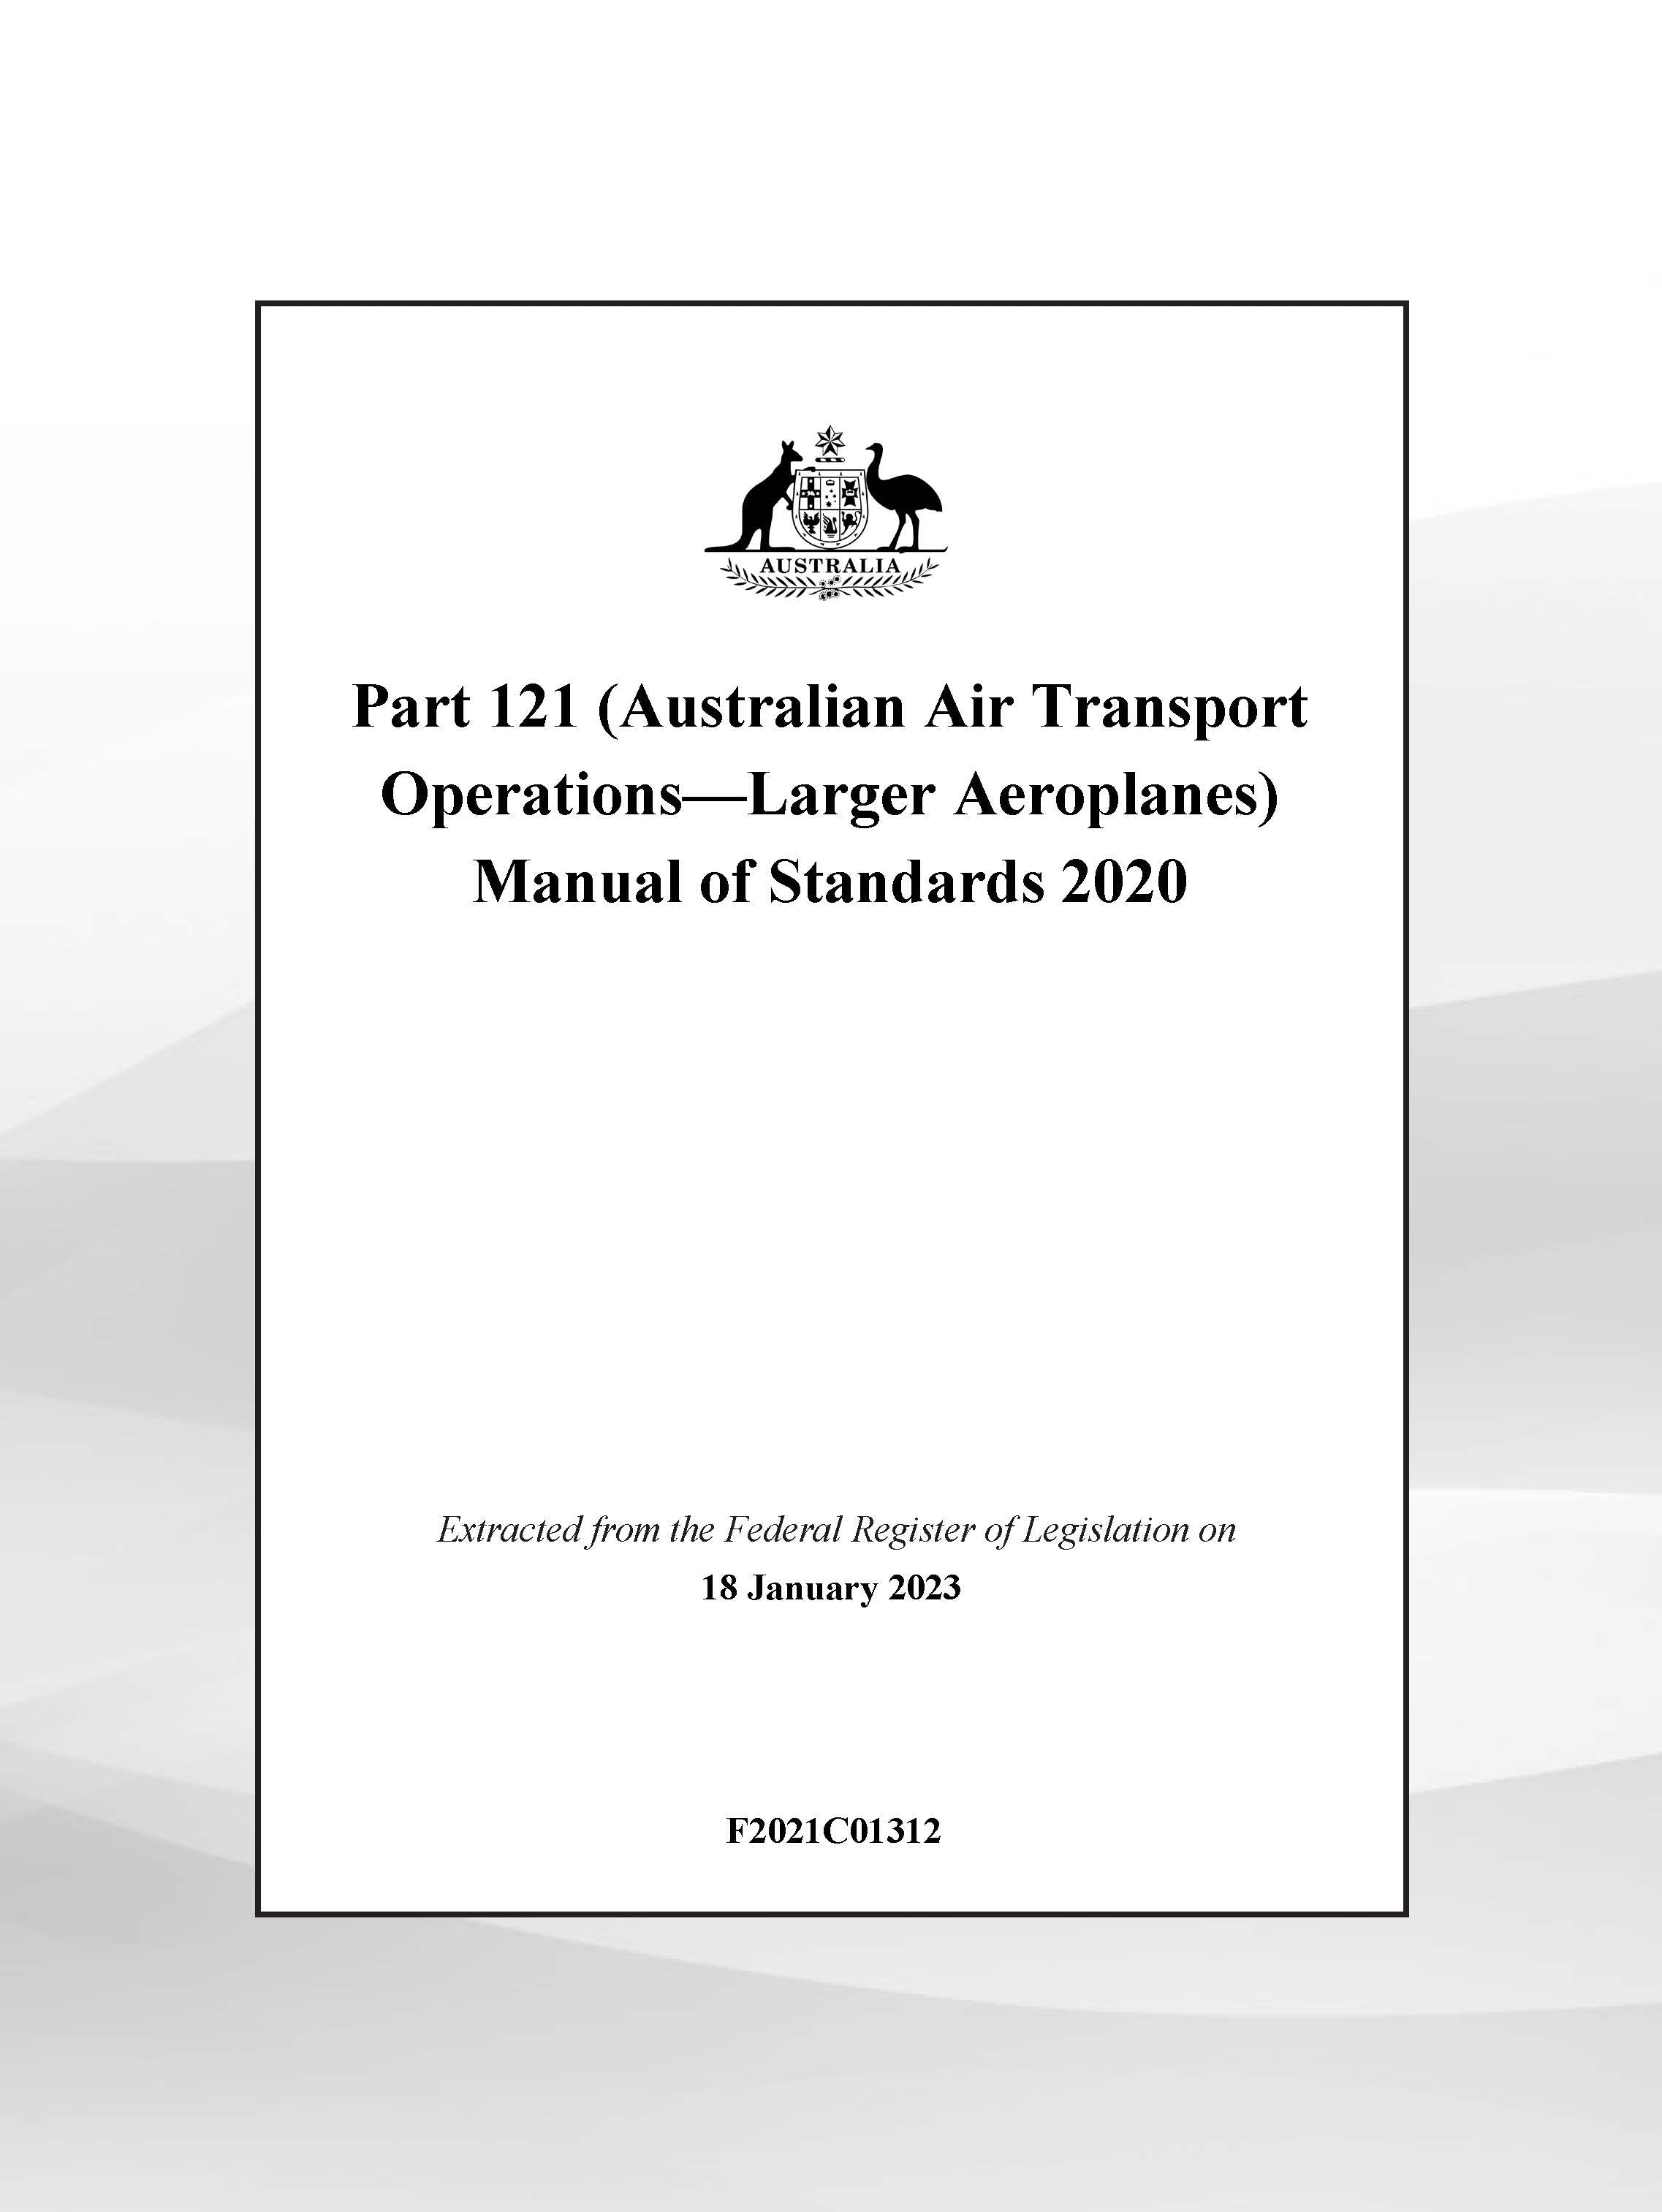 CASA Part 121 MOS Australian Air Transport Operations—Larger Aeroplanes